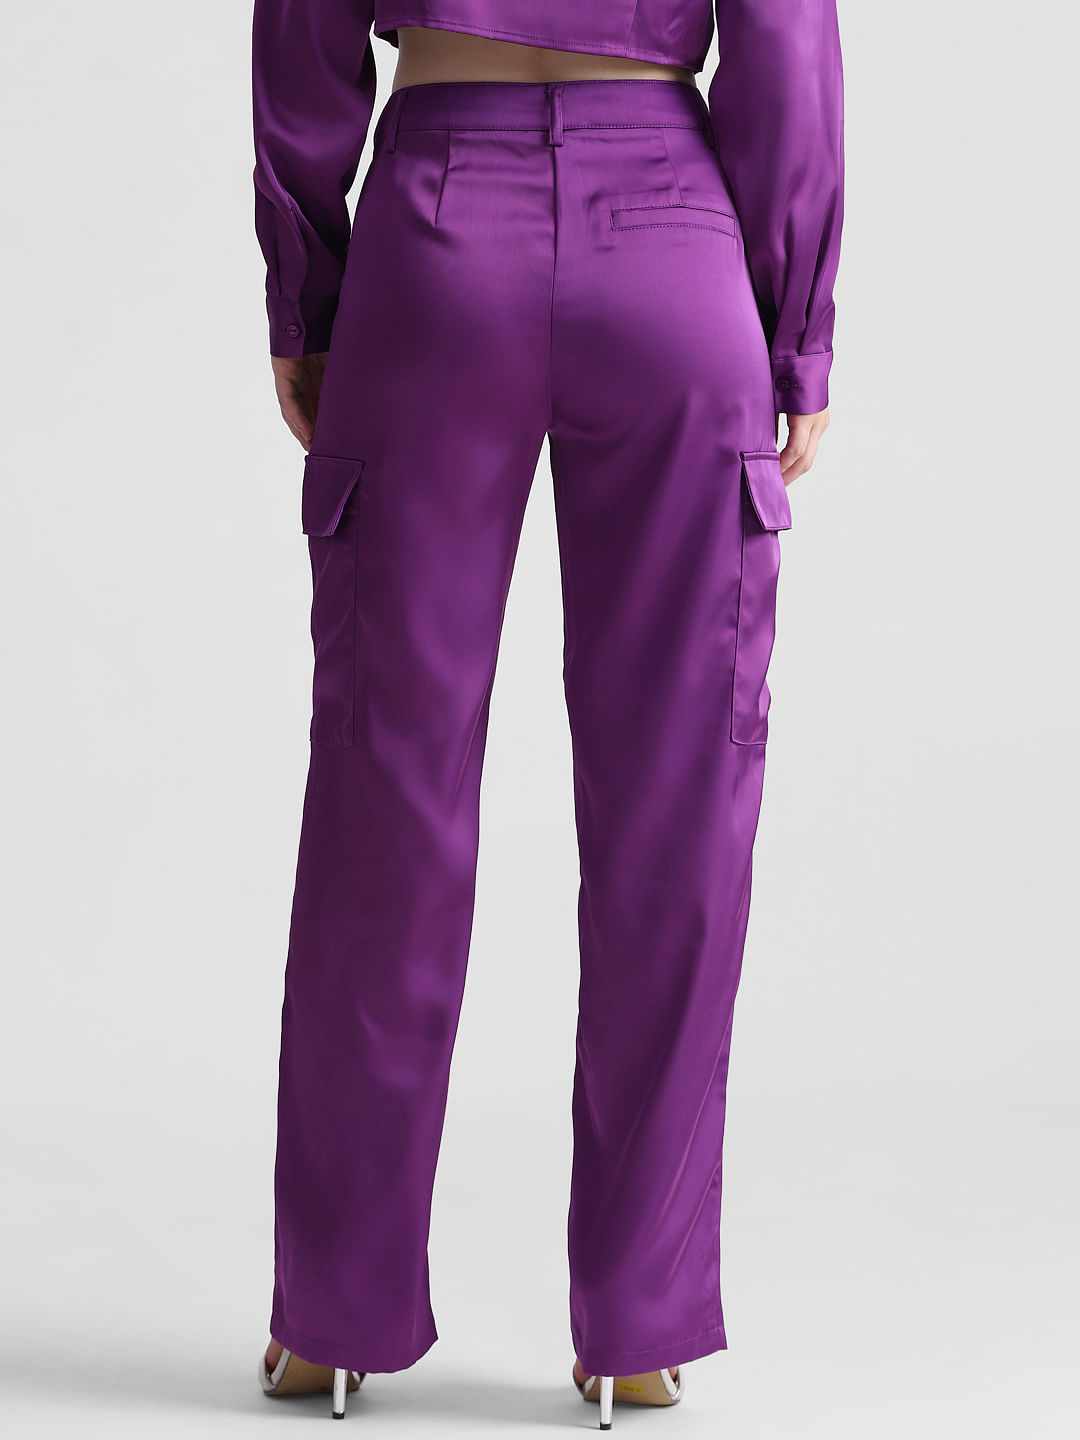 Marks  Spencer  Pants  Jumpsuits  Marks And Spencer Ms Basic Purple  Full Length 6 Pockets Cotton Cargo Pant  Poshmark